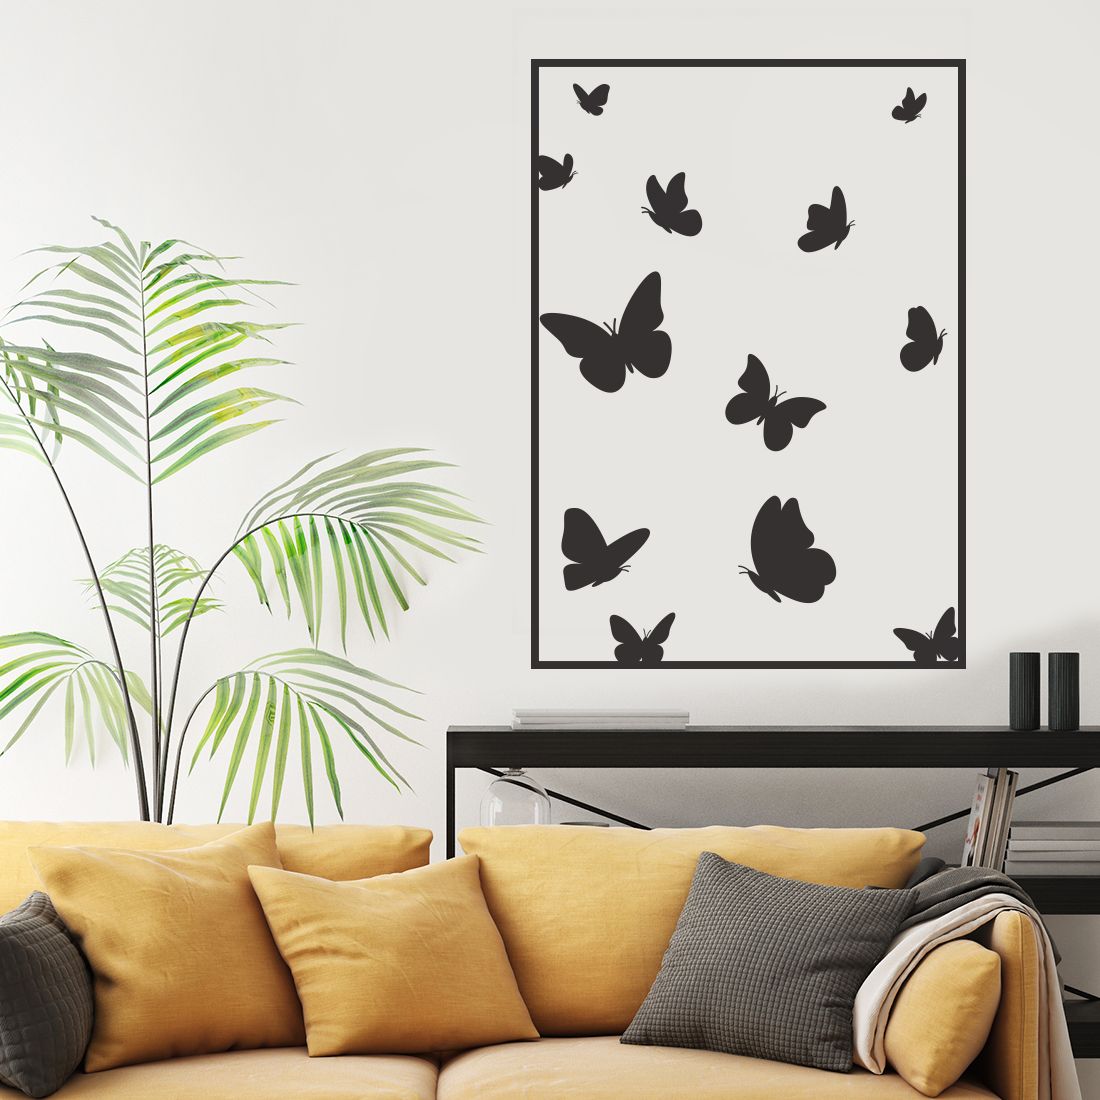 Sticker mural - Couple de papillons